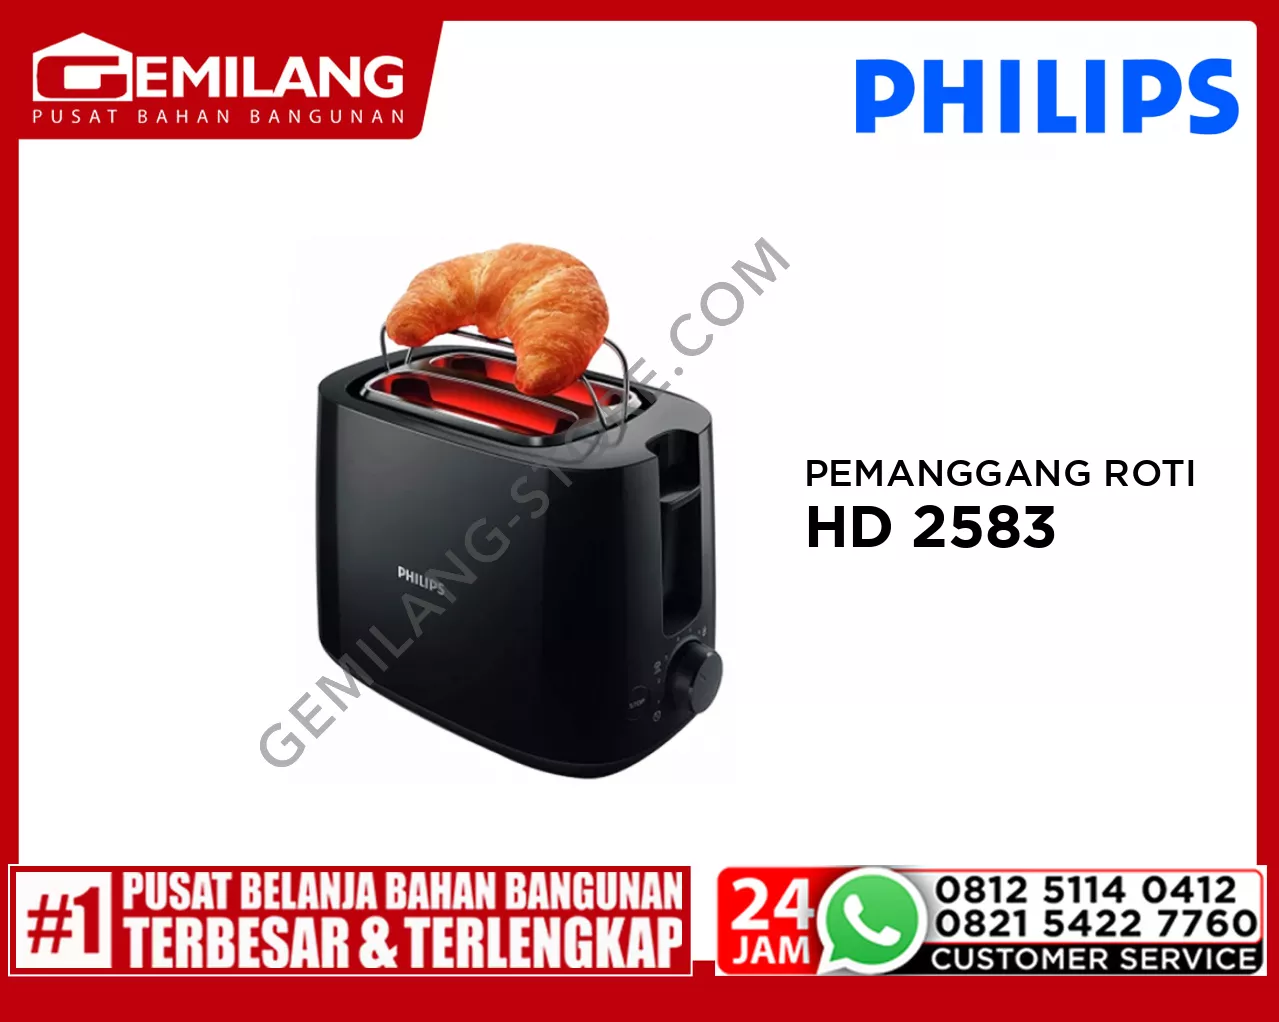 PHILIPS PEMANGGANG ROTI HD 2583